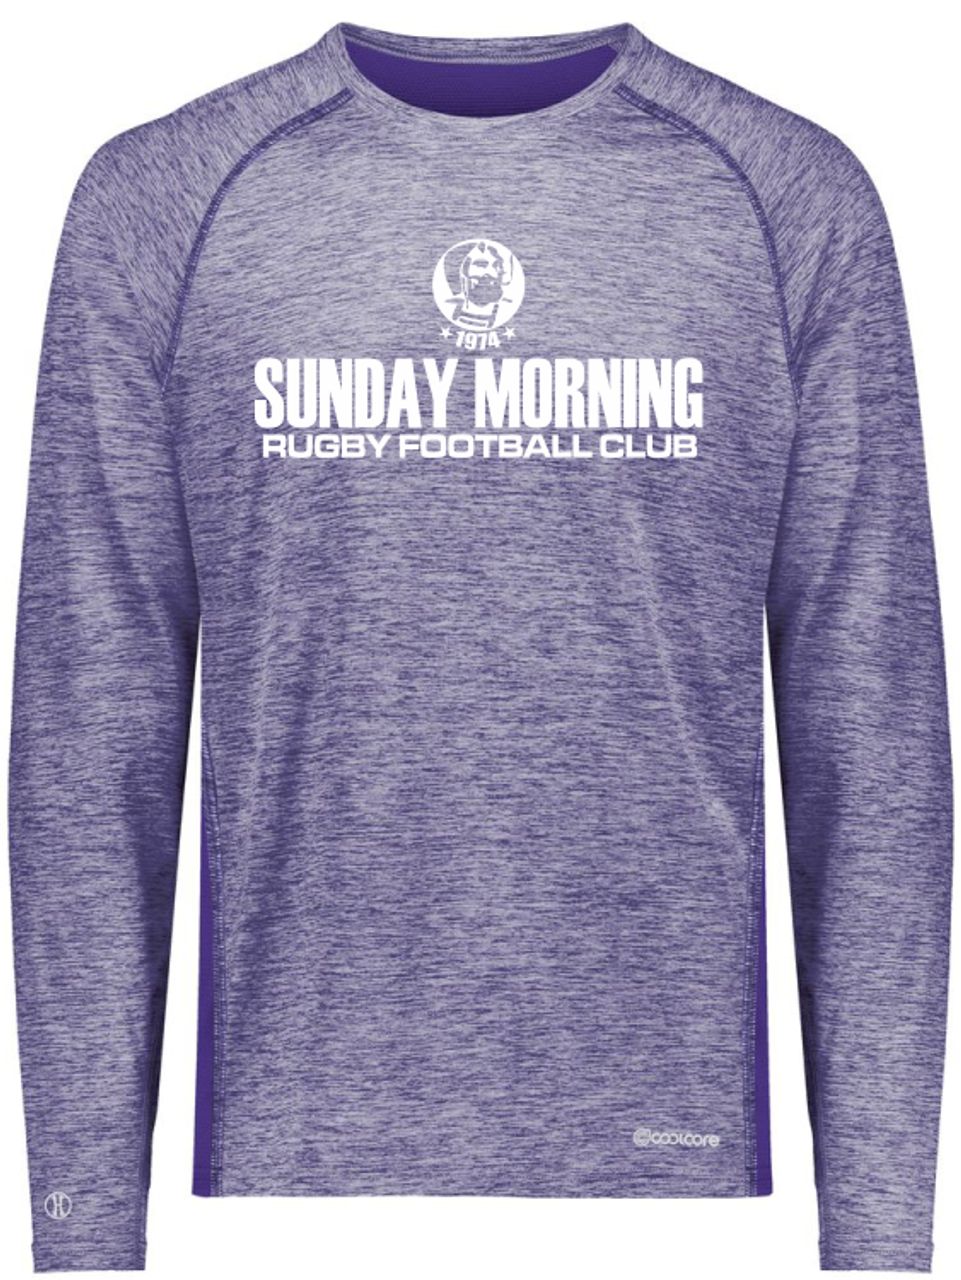 Sunday Morning Rugby Performance Tee, Heathered Purple